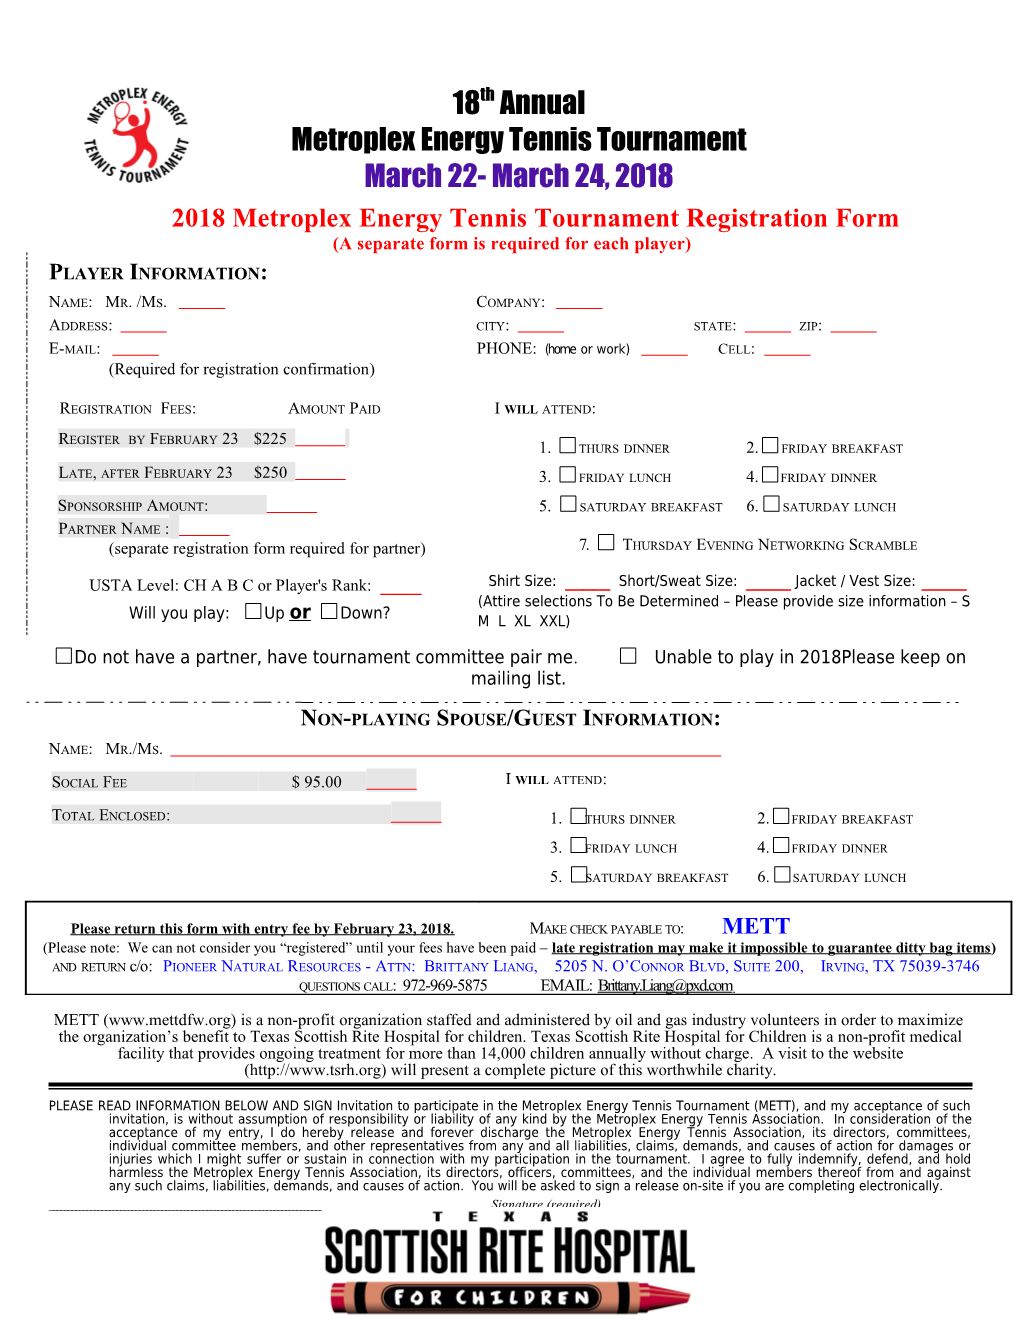 2018 Metroplex Energy Tennis Tournament Registration Form